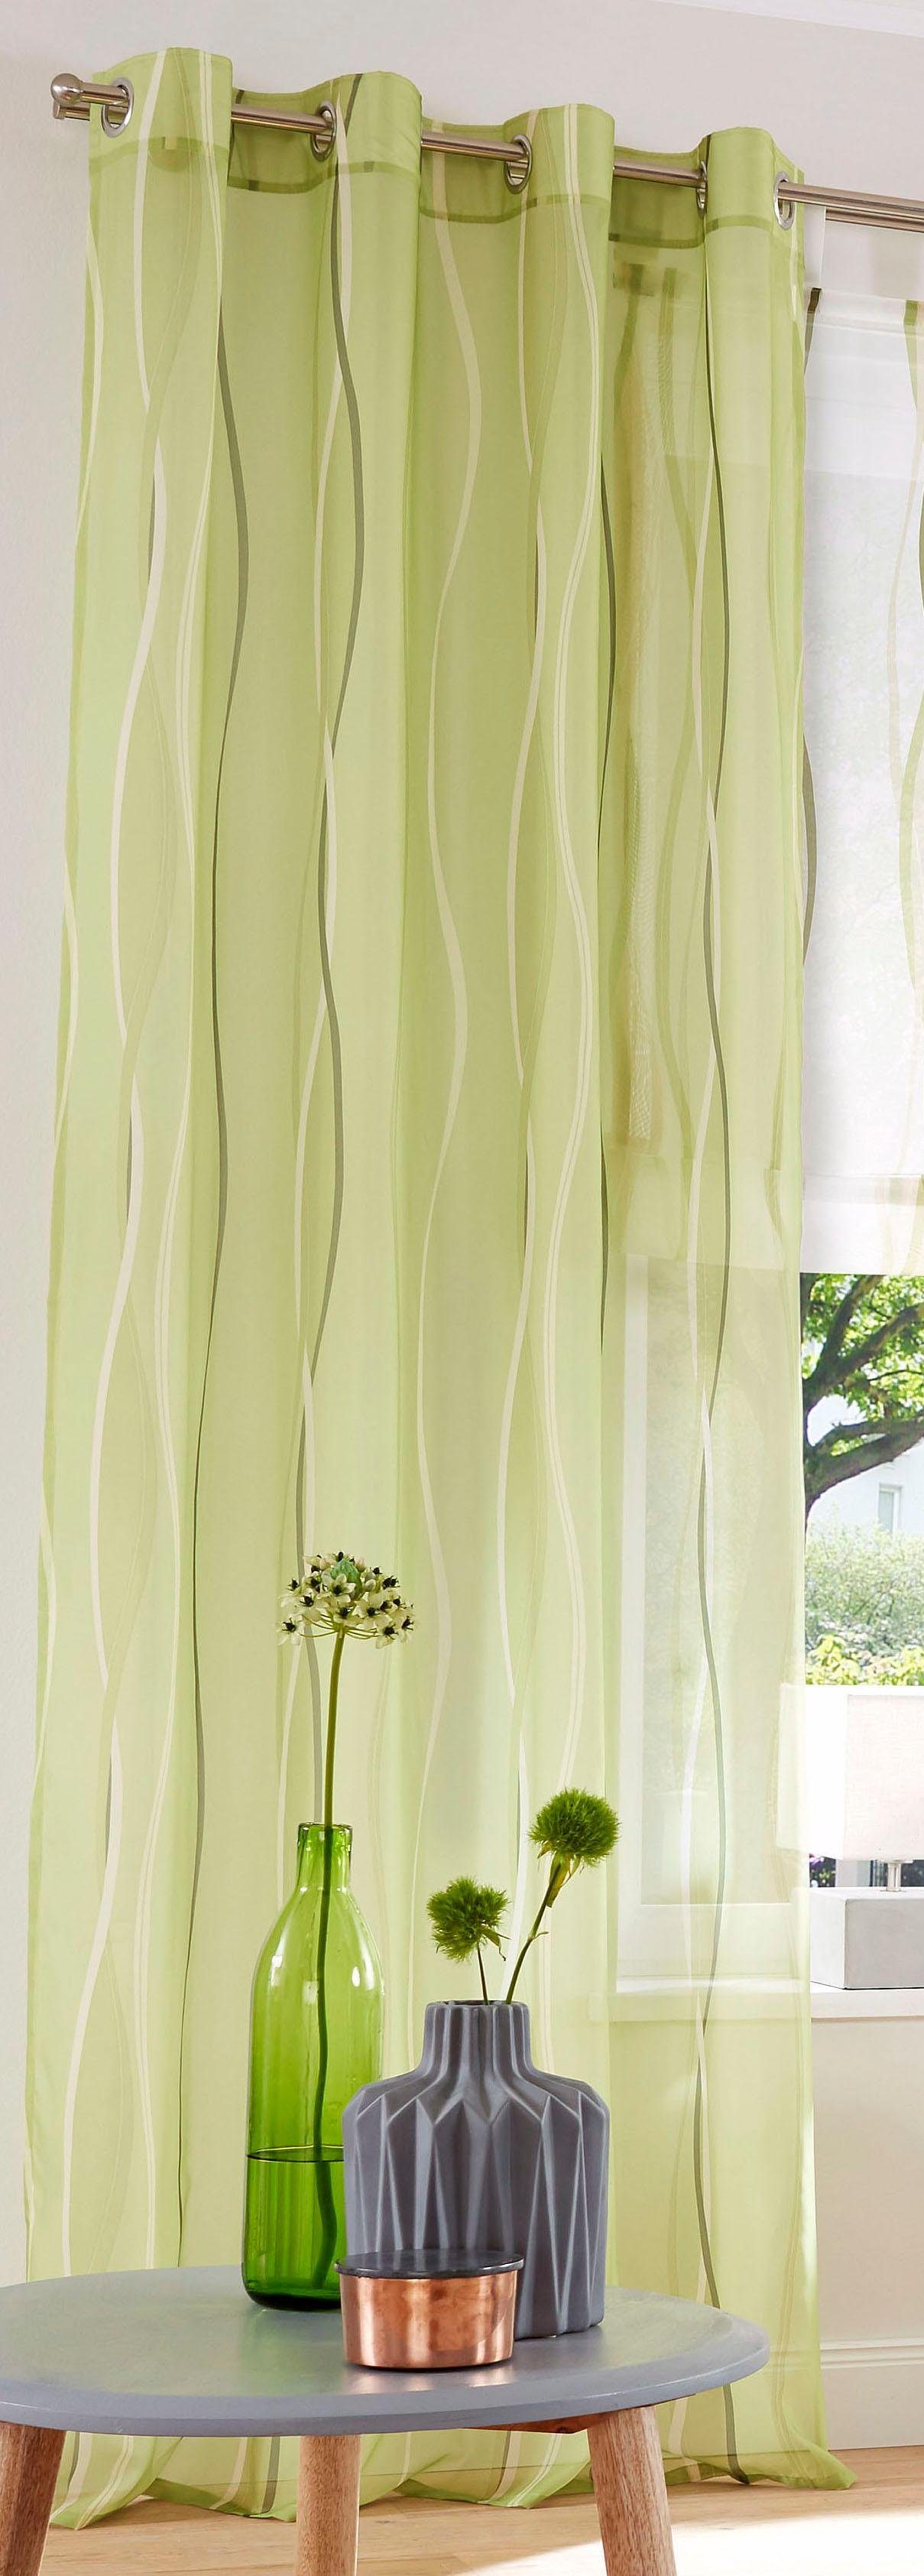 Ösen grün Polyester transparent, Dimona, 2er-Set, Gardine transparent, (2 St), Voile, home, my Voile,